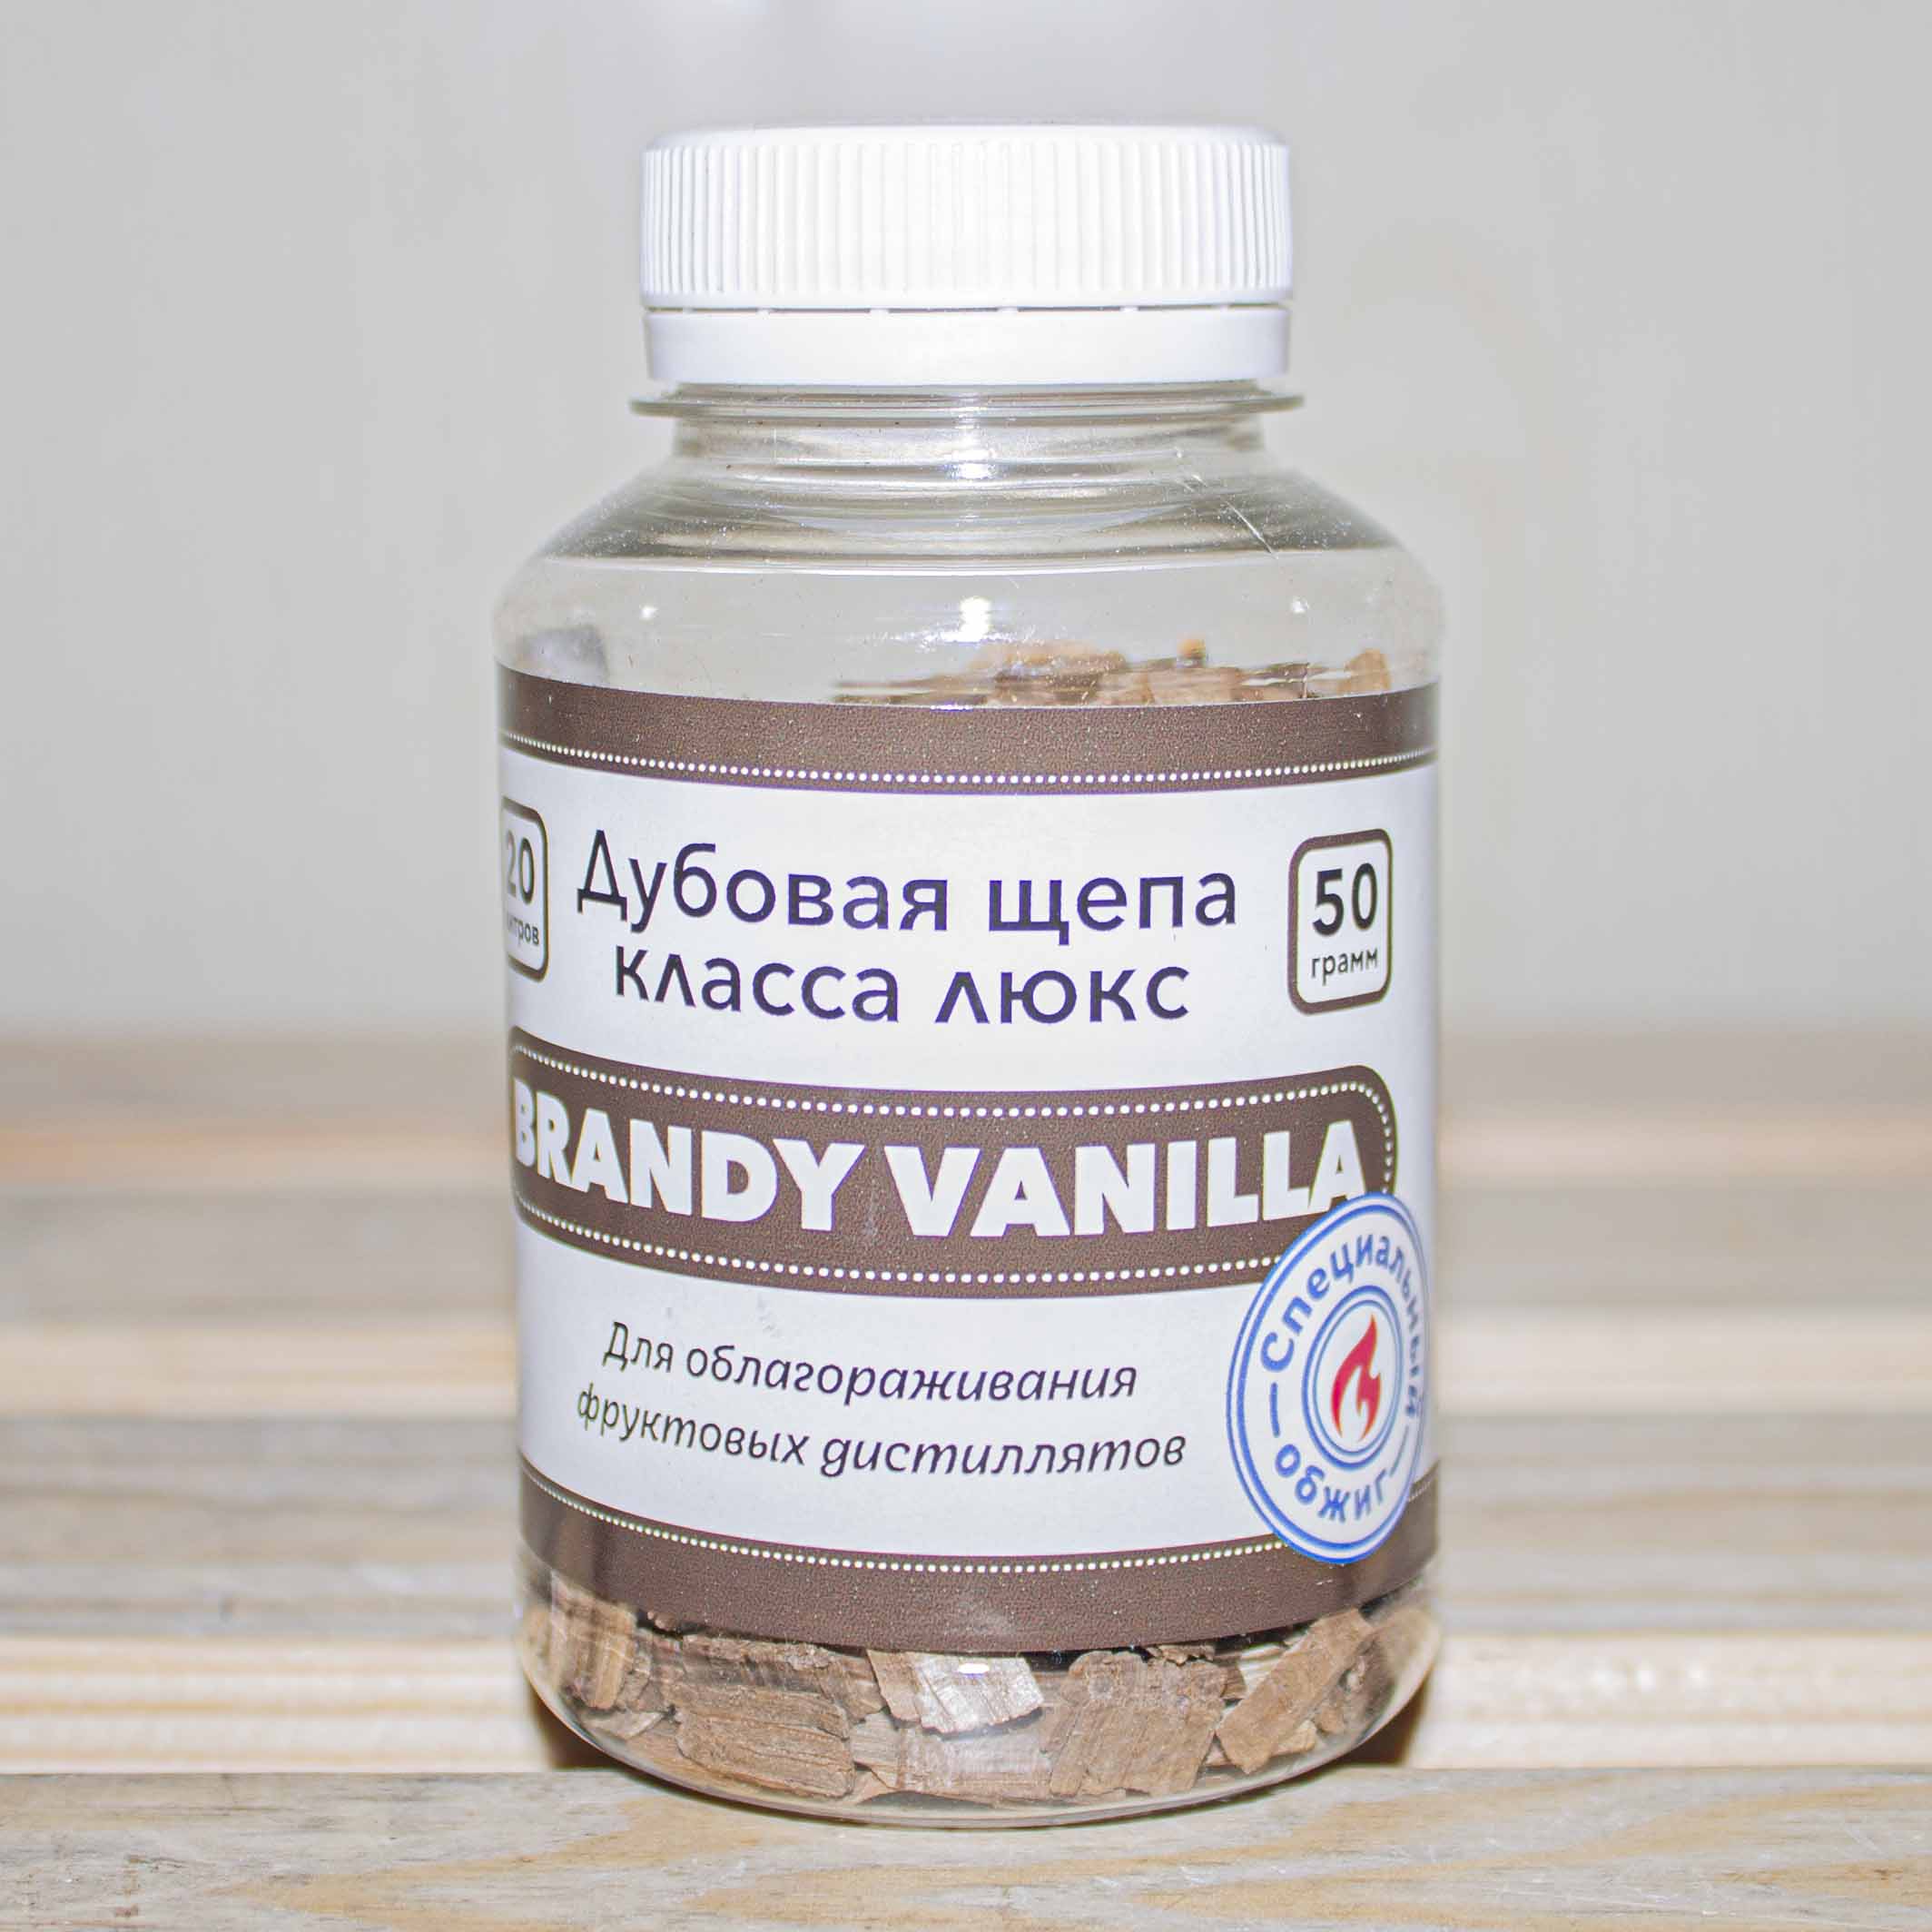 Brandy Vanilla